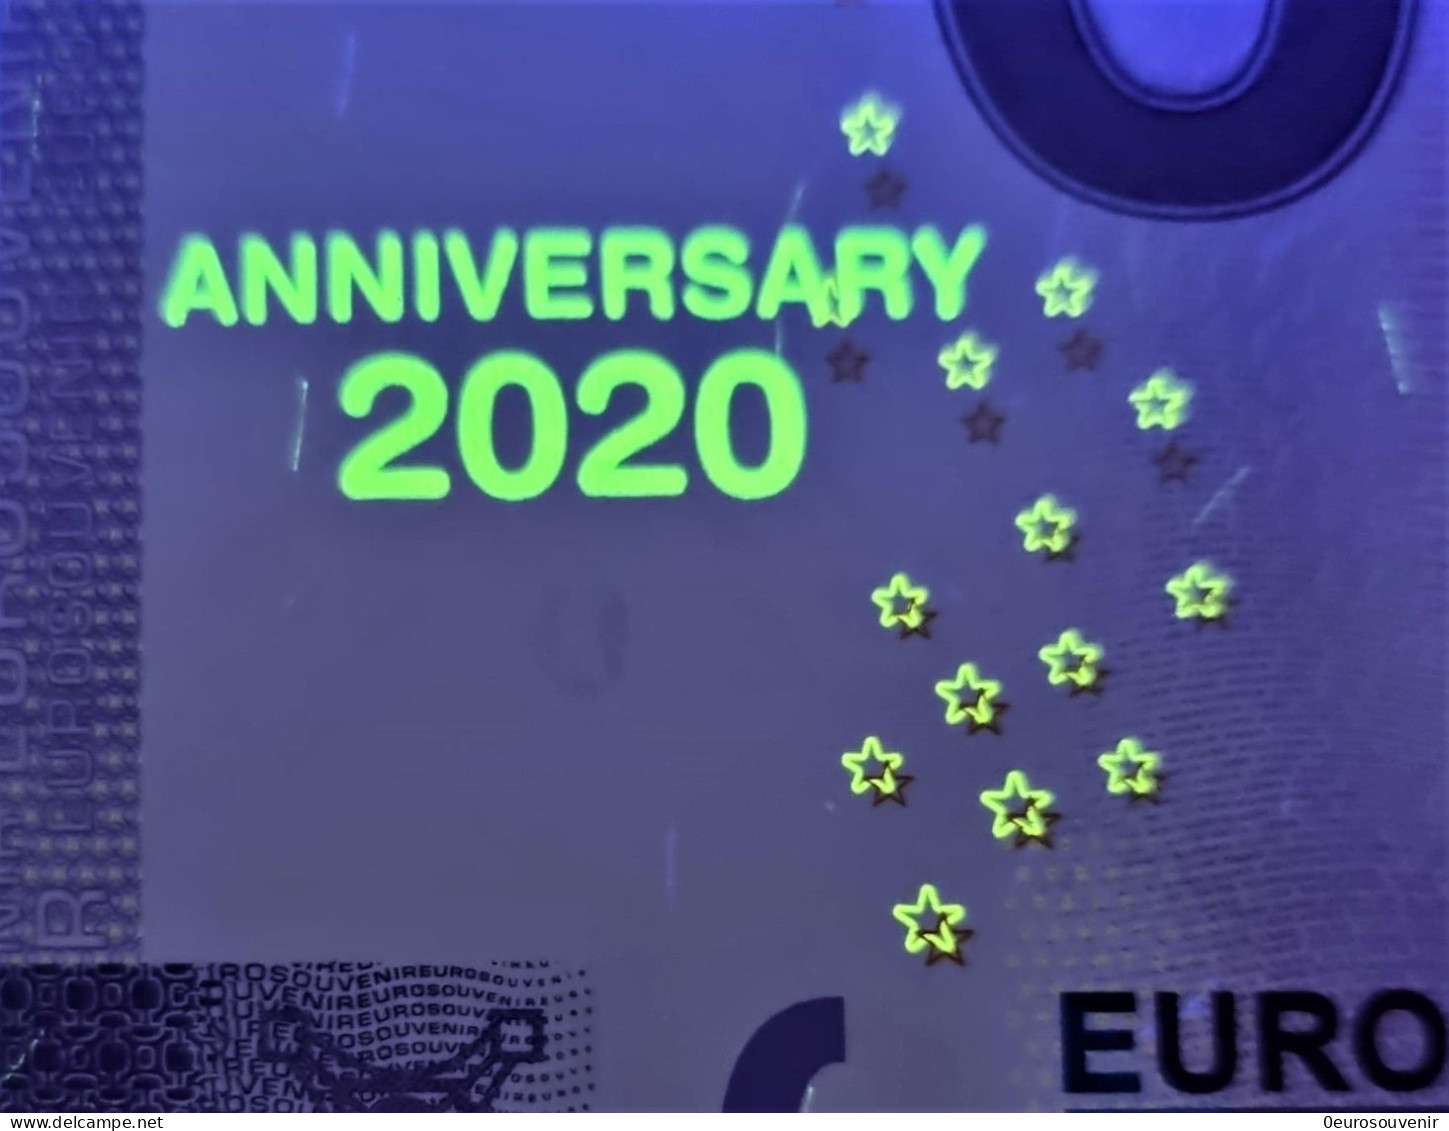 0-Euro XECV 2022-3 SEA LIFE CENTER OBERHAUSEN  Set NORMAL+ANNIVERSARY - Private Proofs / Unofficial